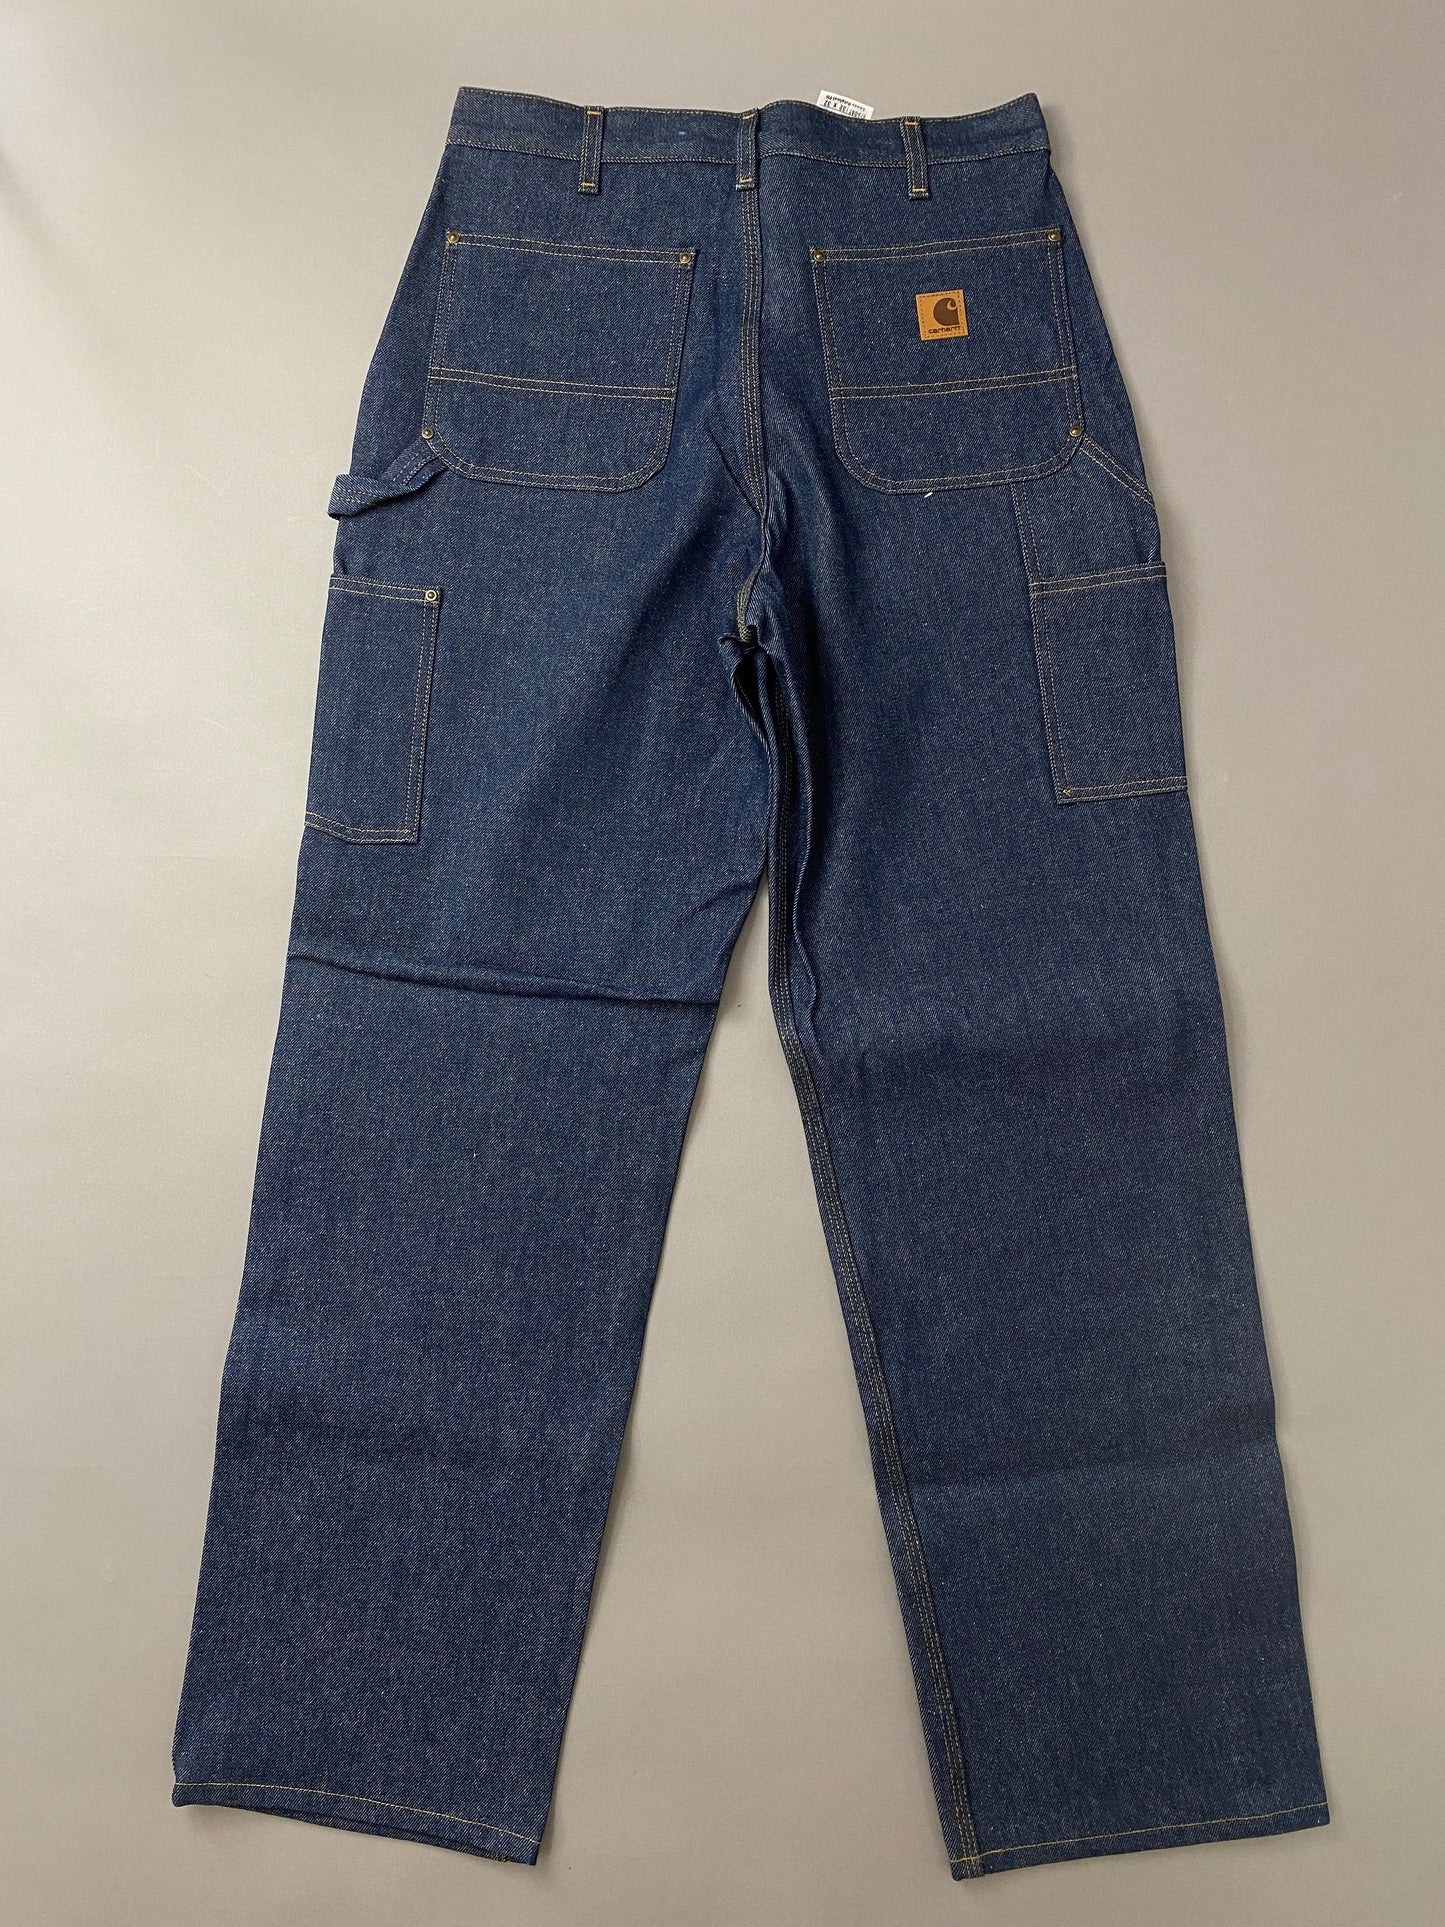 Double Knee Carhartt Jeans - 34 x 32